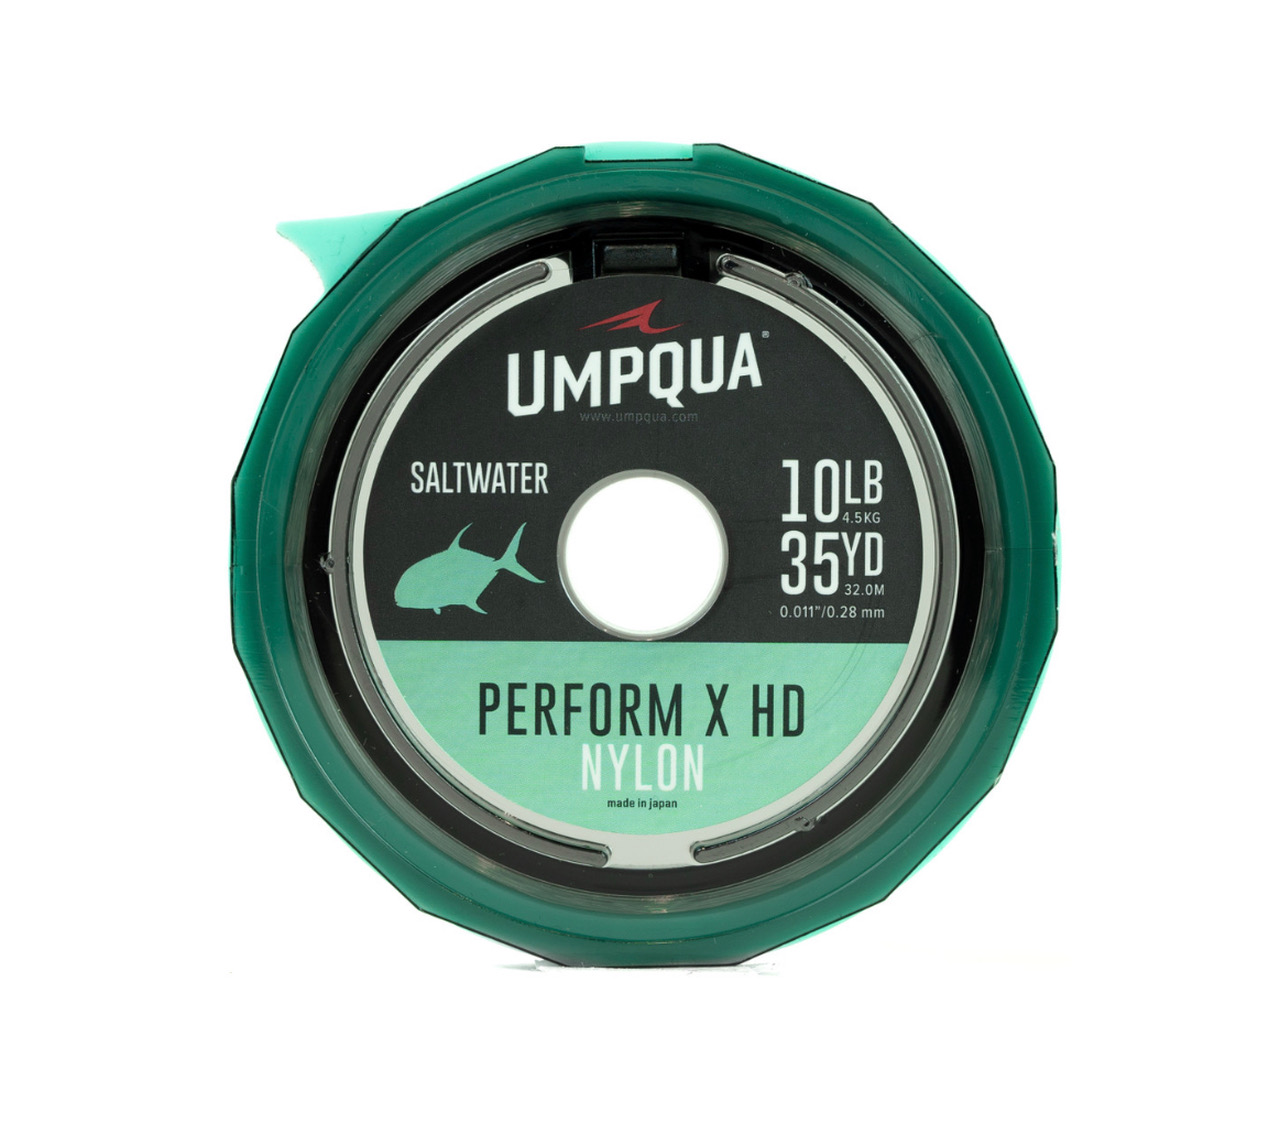 Umpqua Perform X HD Saltwater Nylon Tippet - 25yd - 20lb